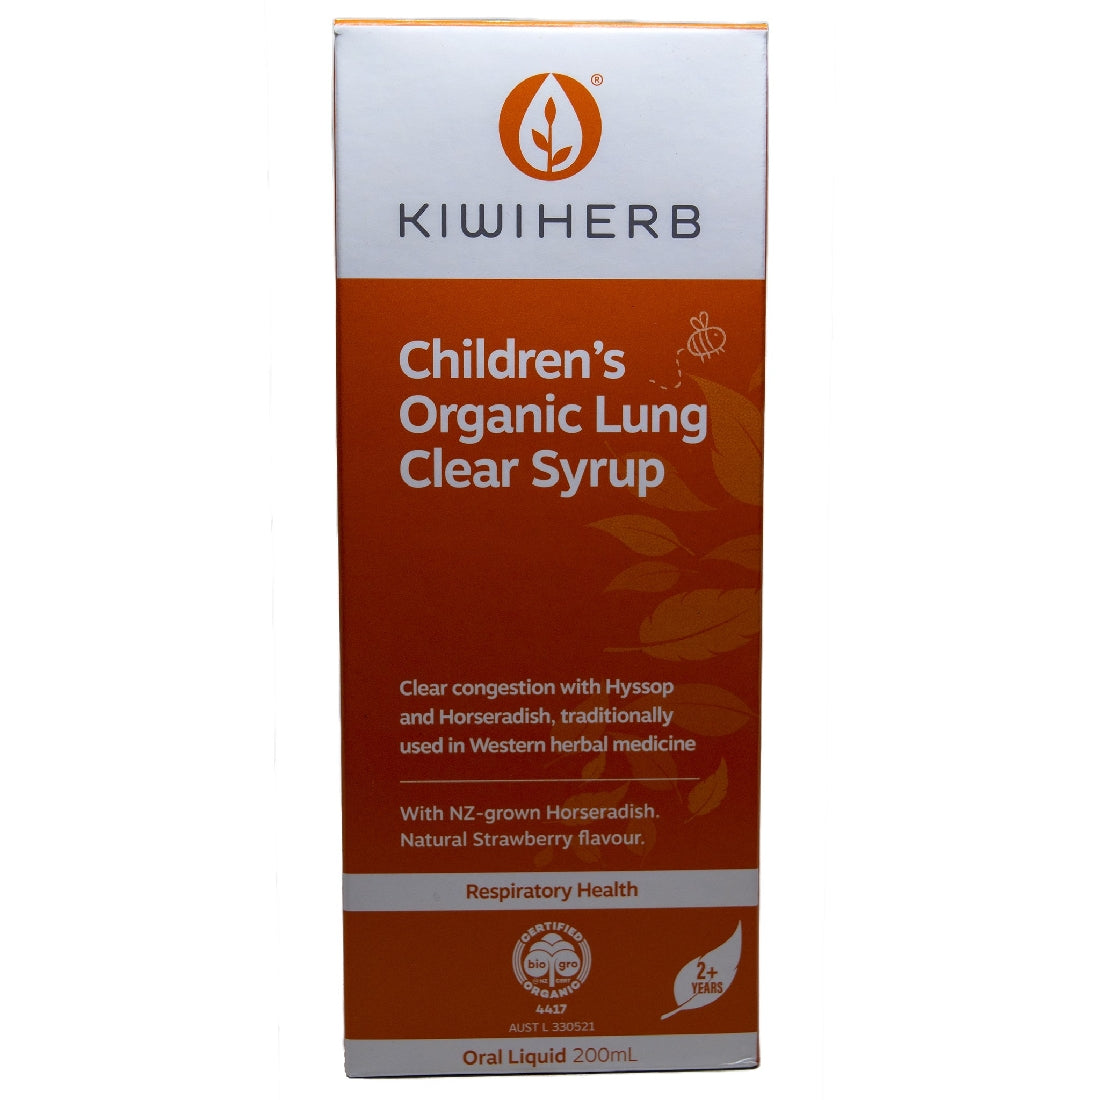 KIWIHERB CHILDREN'S ORGANIC LUNG CLEAR SYRUP 200ML